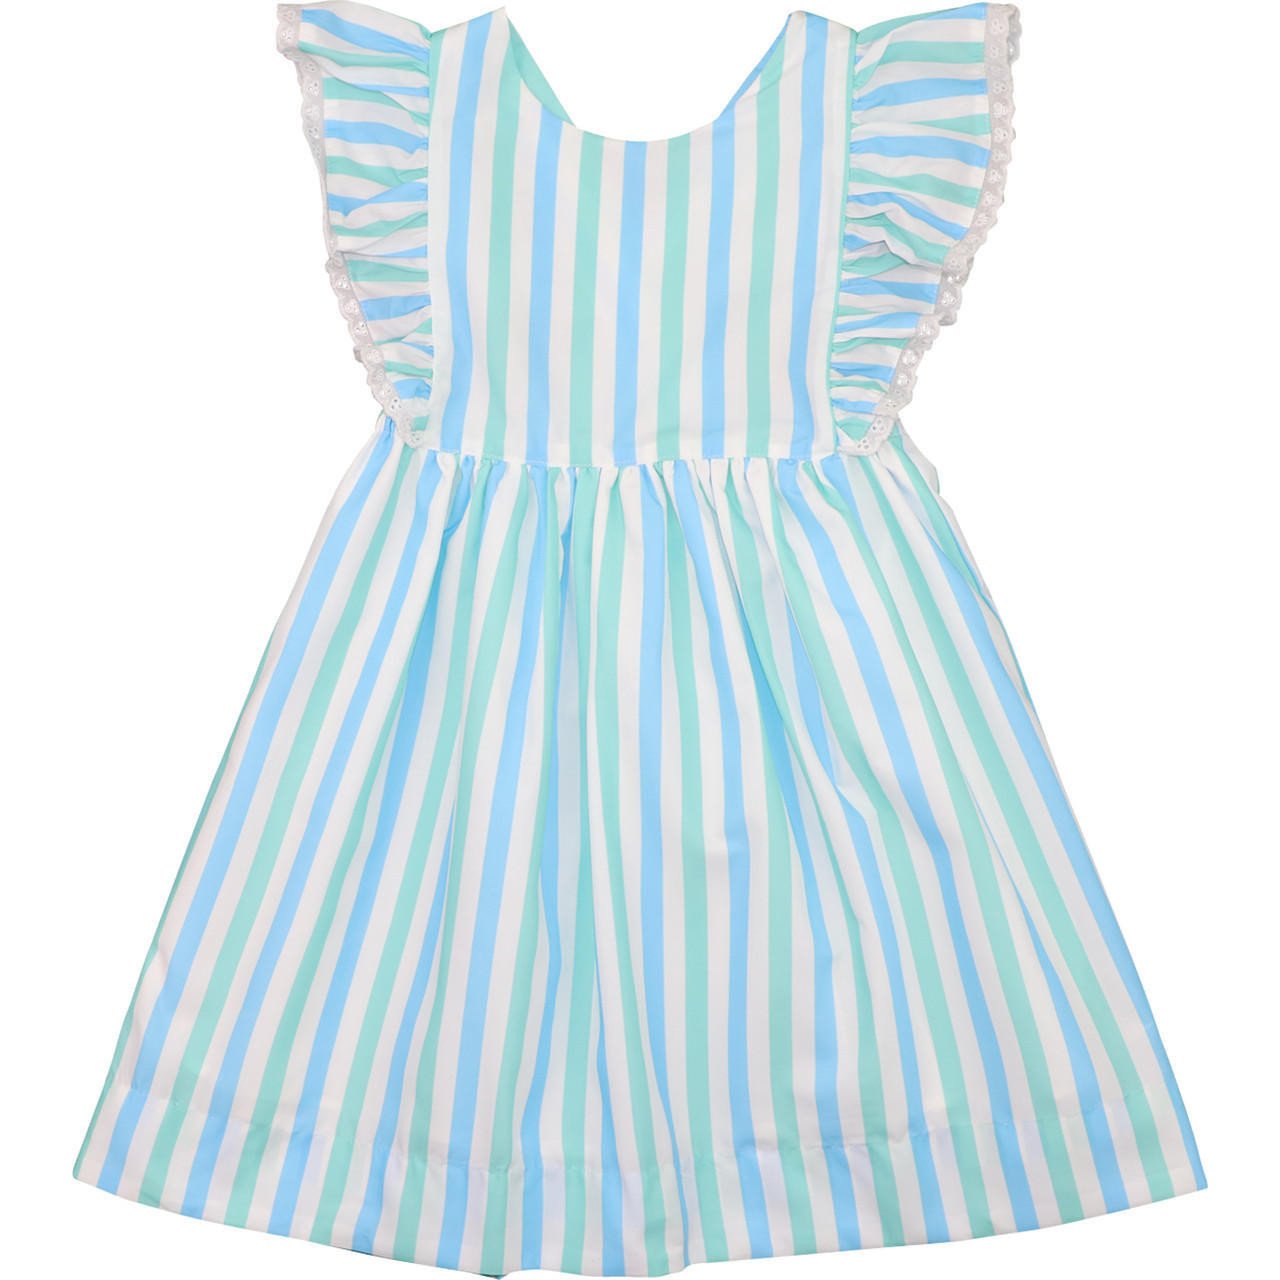 blue-and-green-stripe-ruffle-dress-shipping-mid-may__66168.jpg